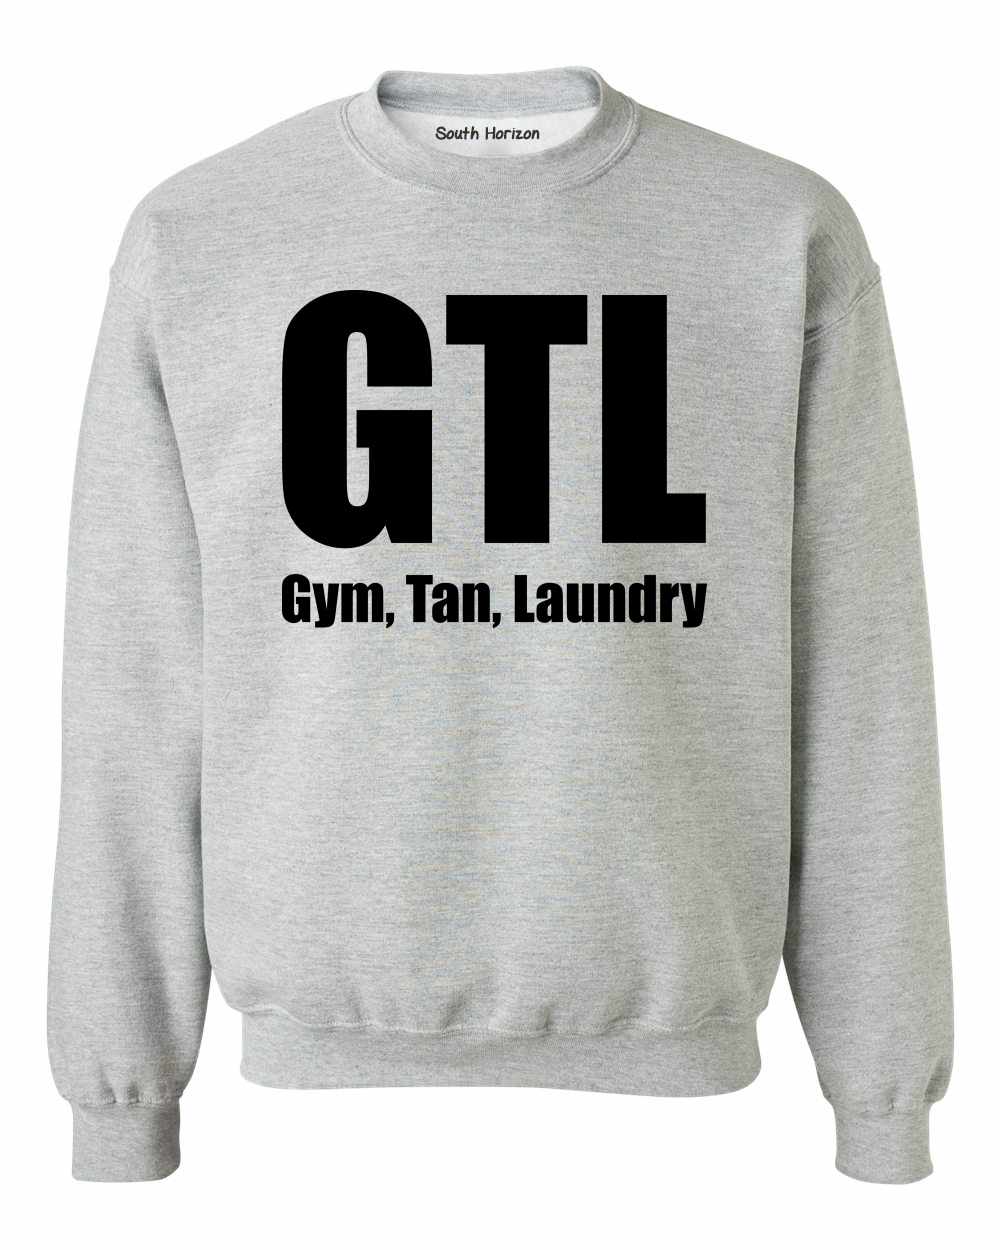 GTL Gym, Tan, Laundry on SweatShirt (#727-11)